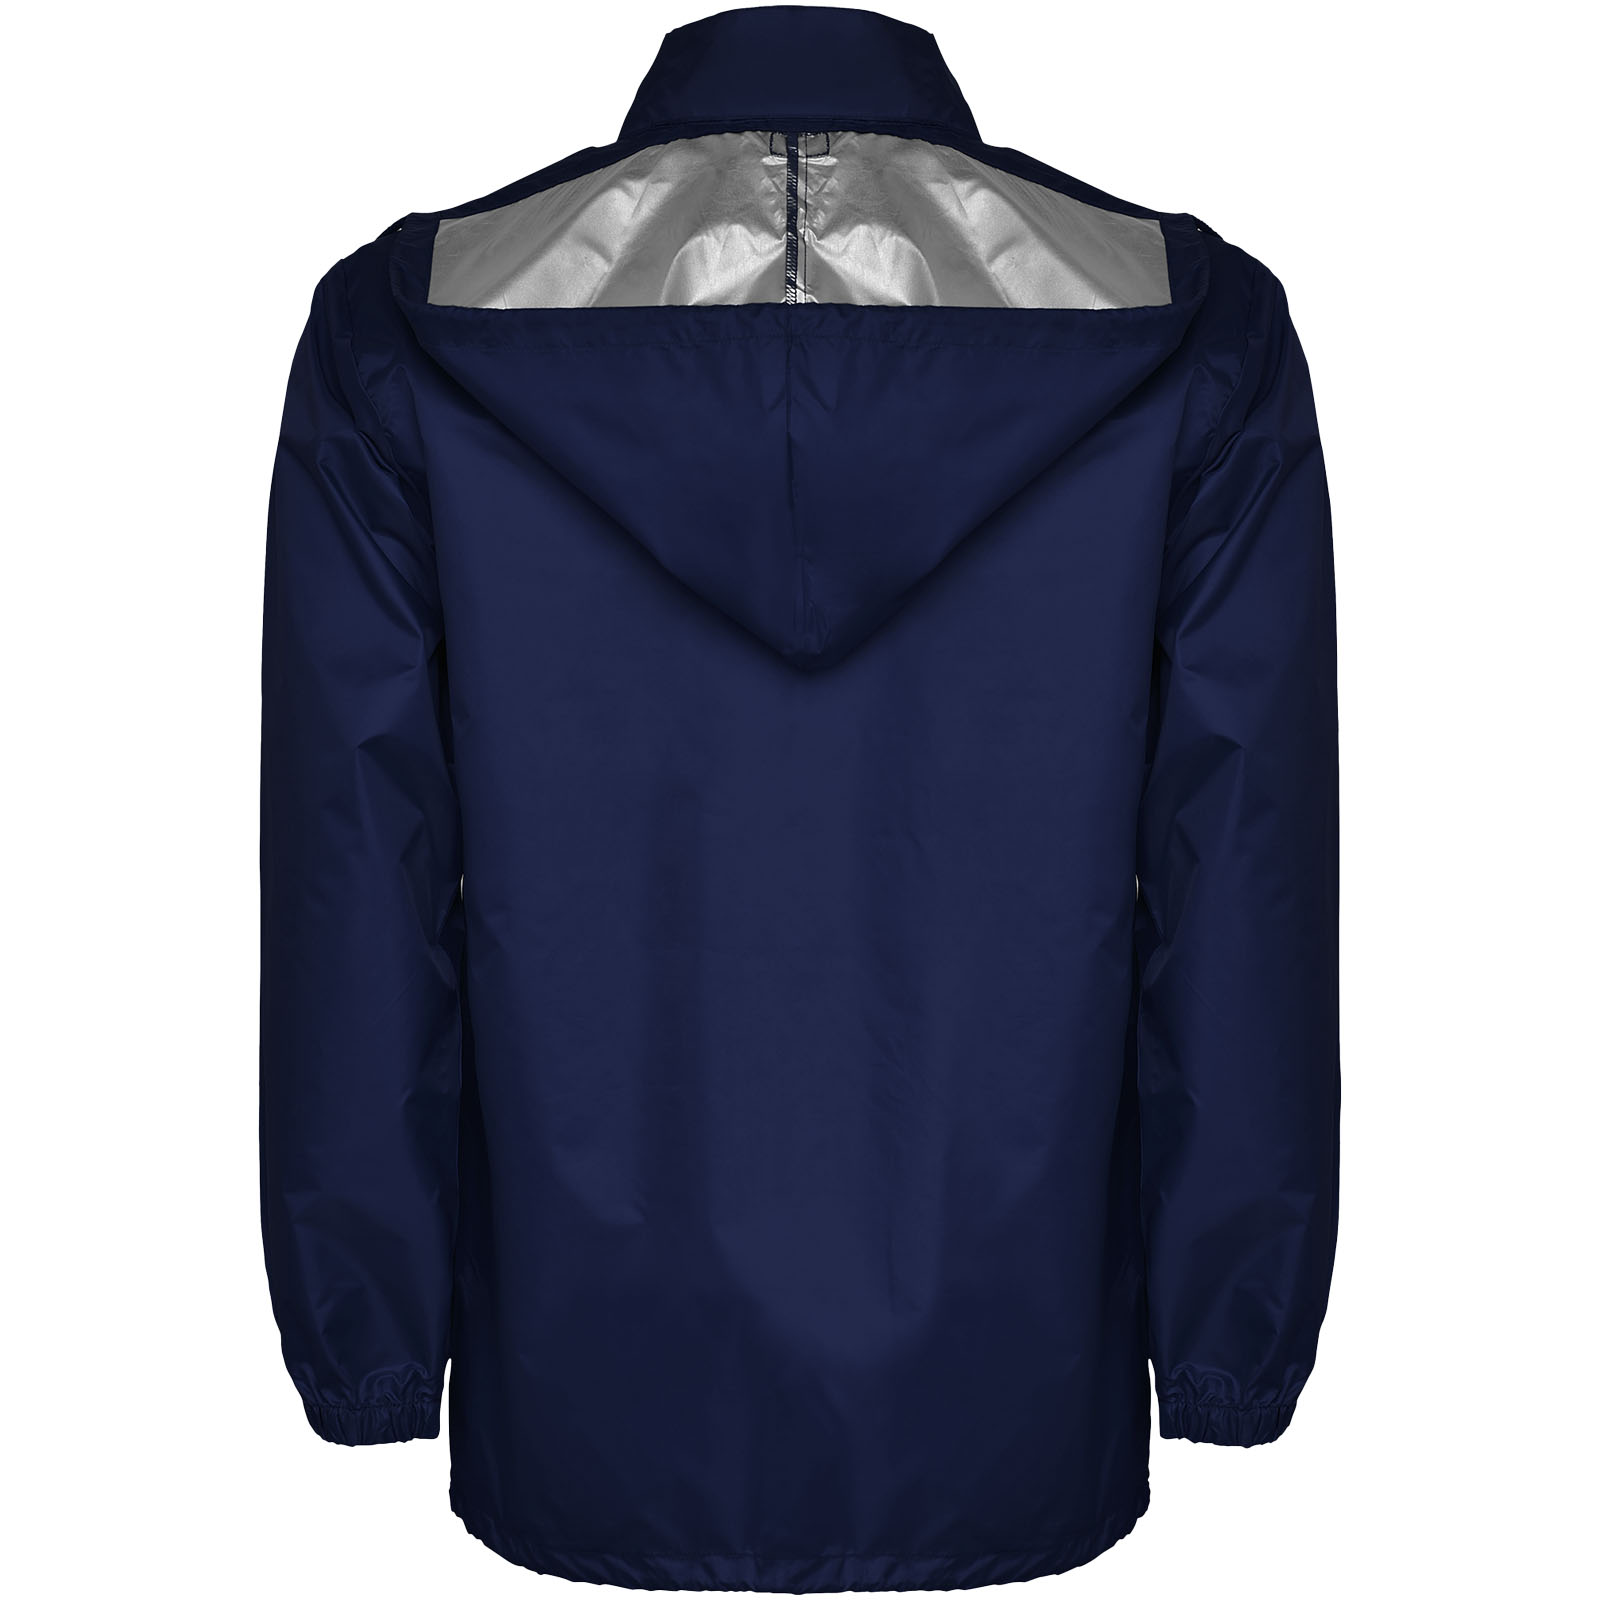 Advertising Jackets - Escocia unisex lightweight rain jacket - 1